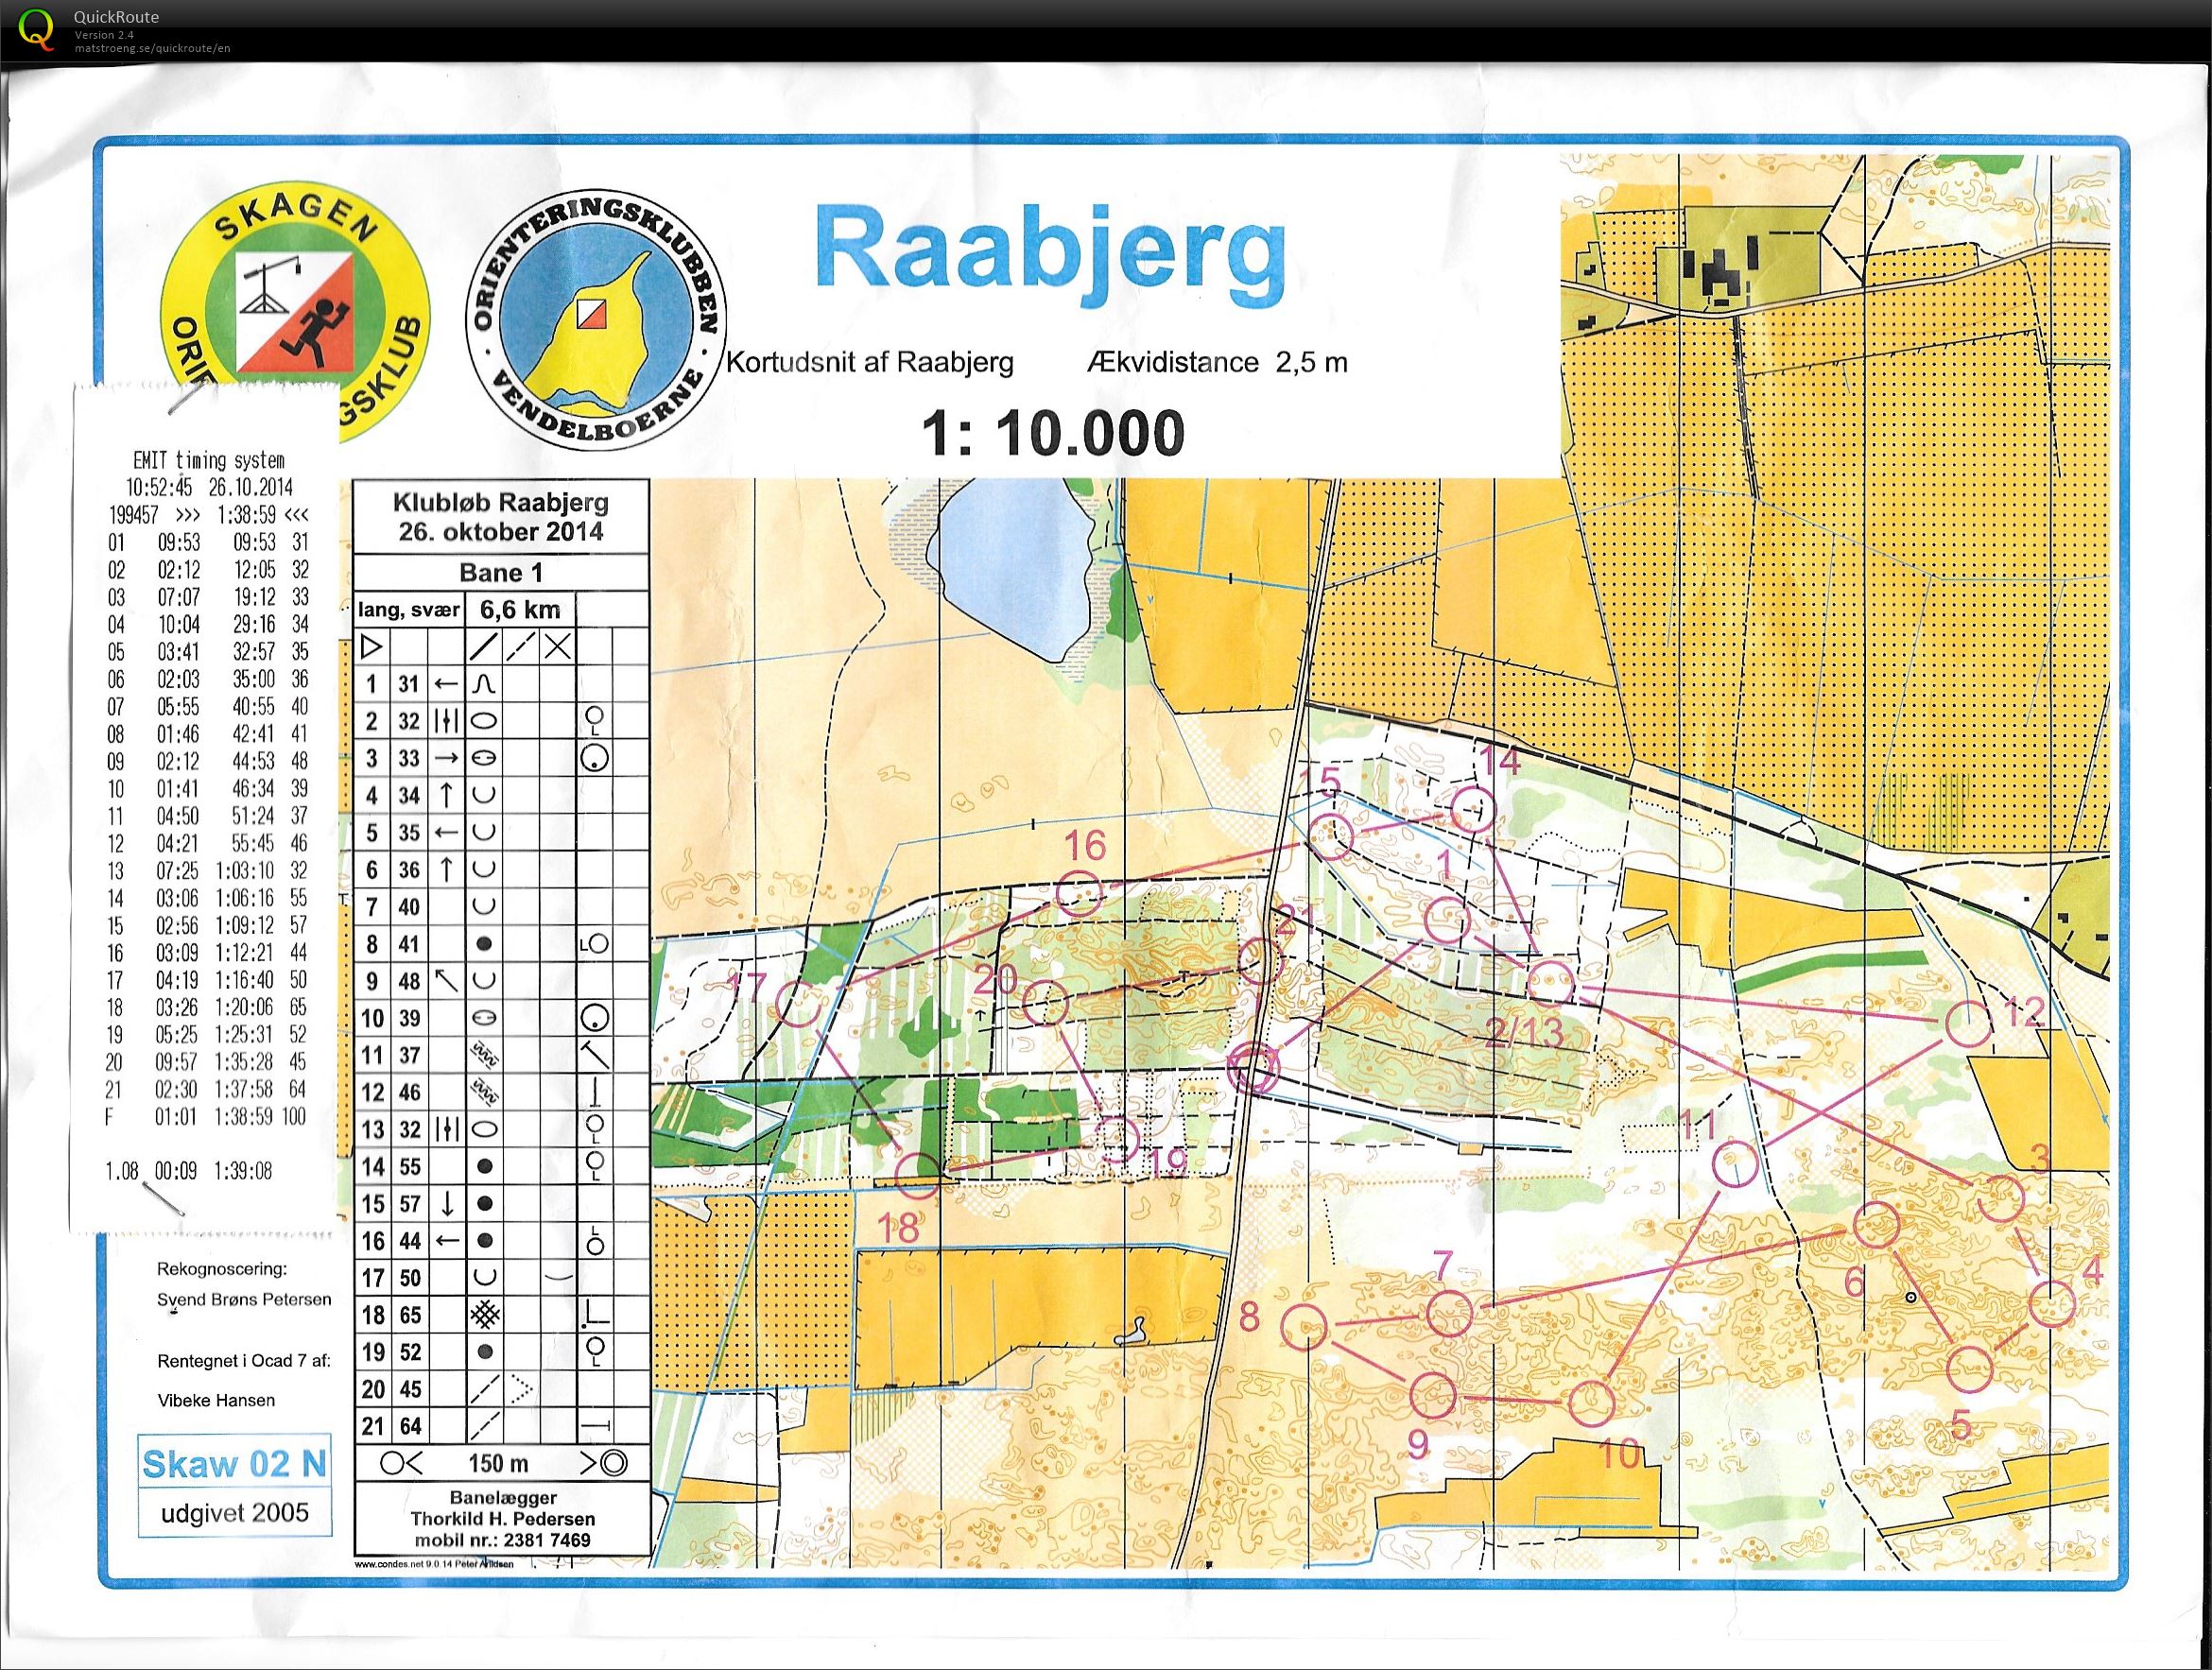 Raabjerg klubløb (26-10-2014)